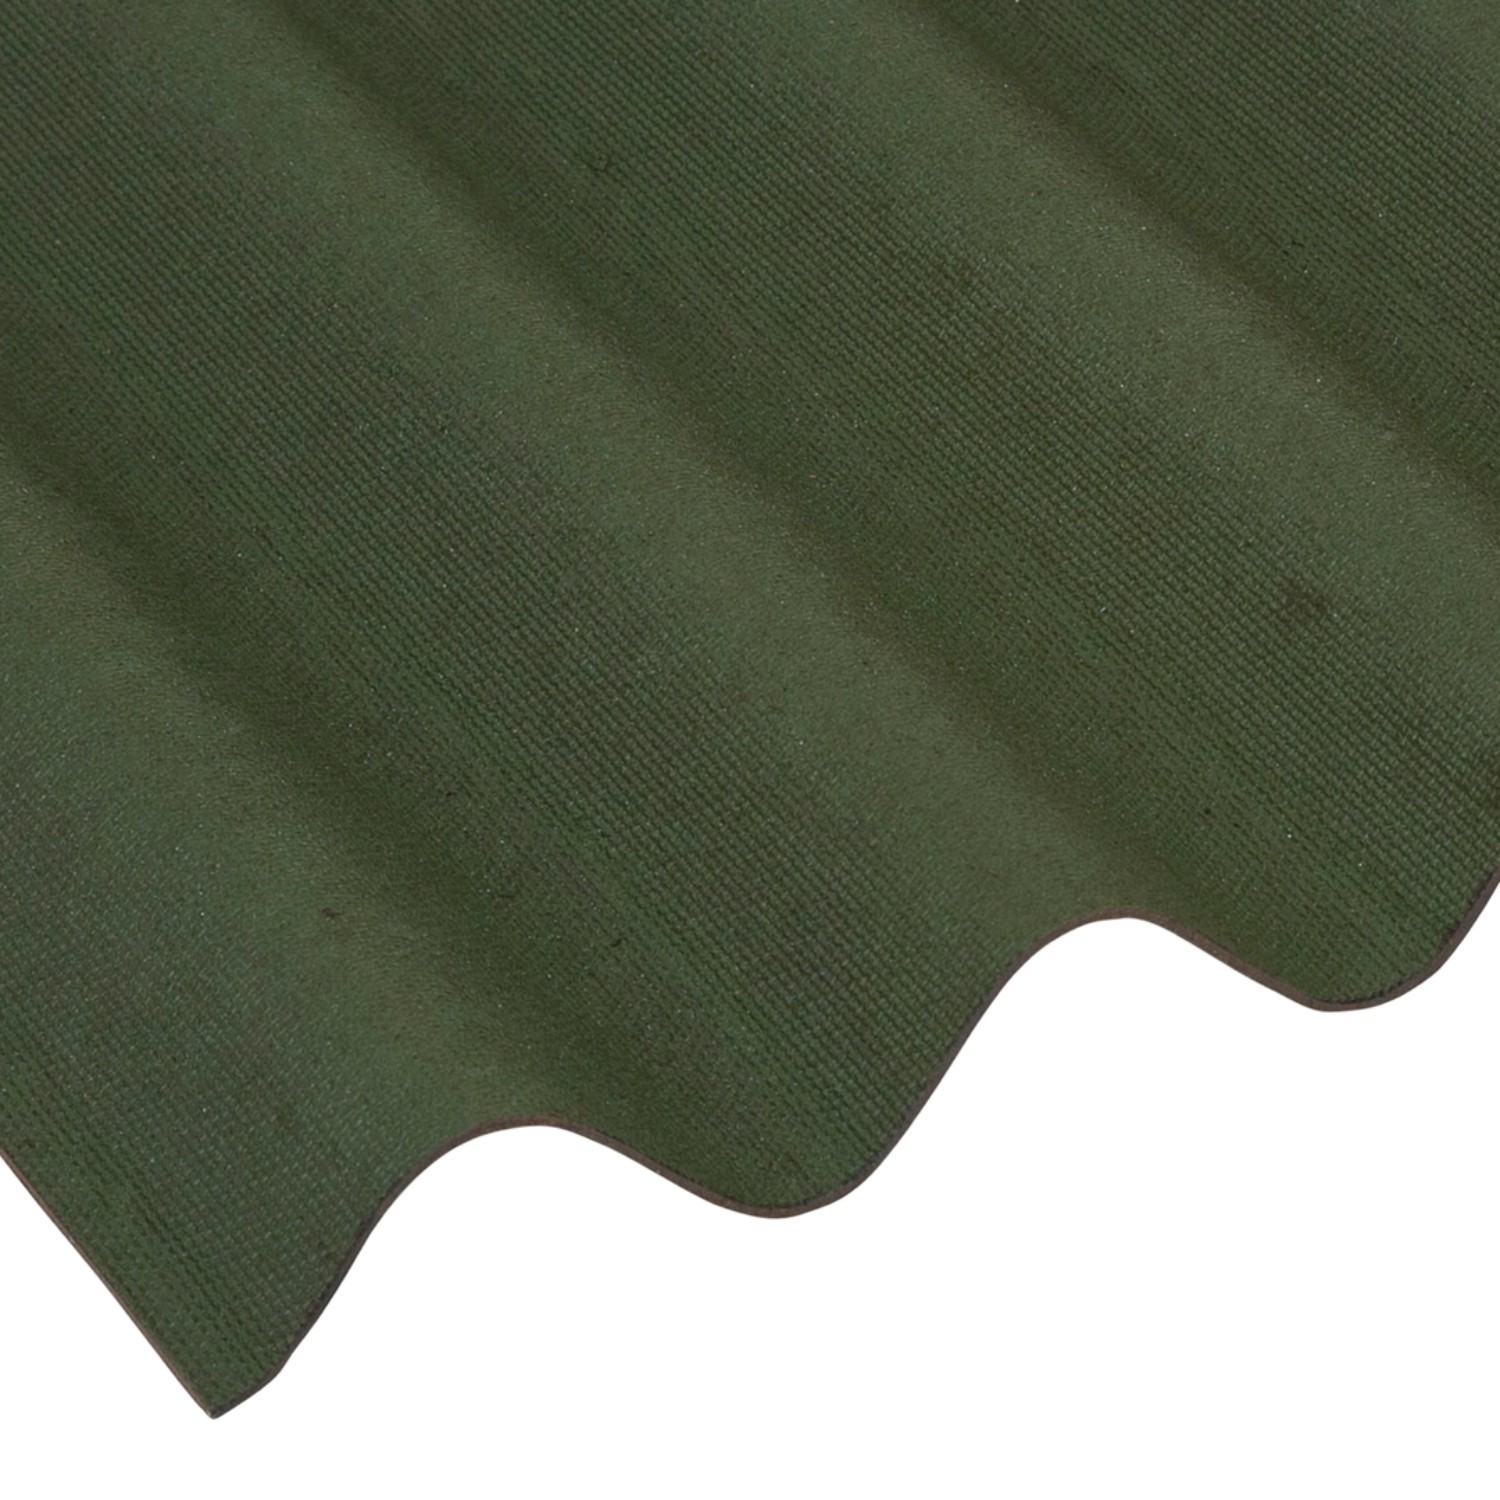 Onduline - Green Corrugated Bitumen Roof Sheet (2000 x 950mm)